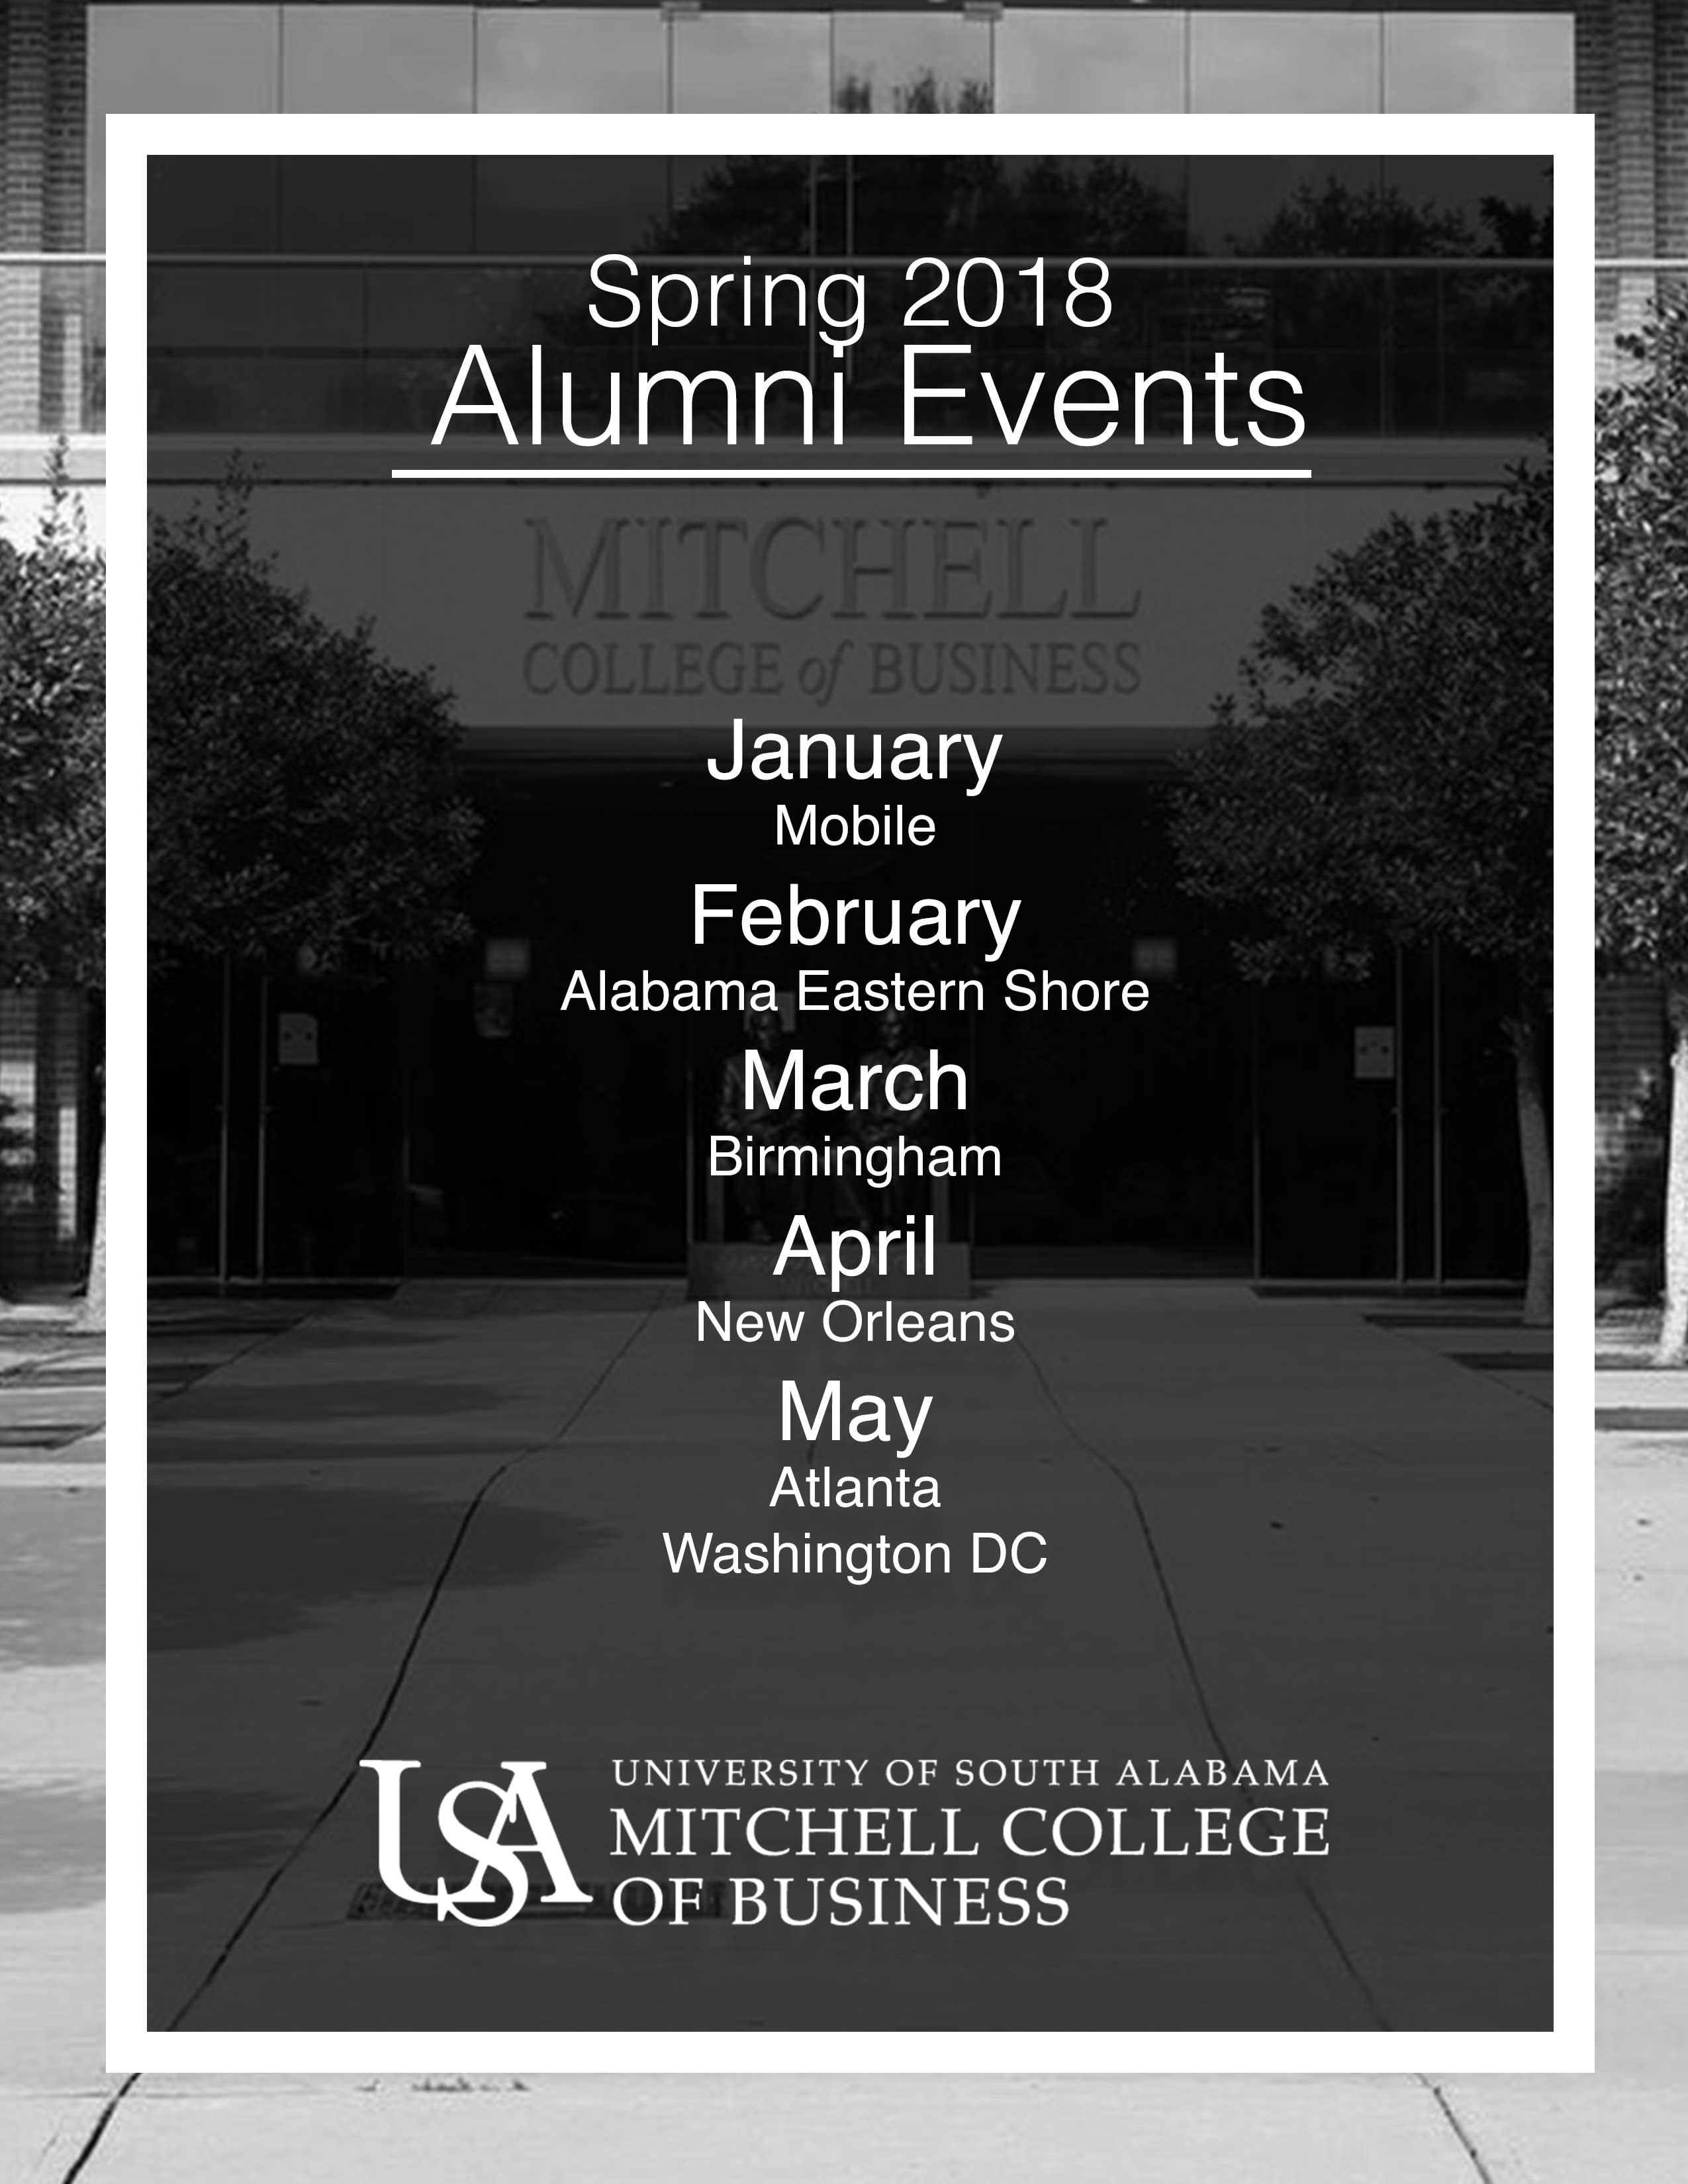 Upcoming Alumni Events